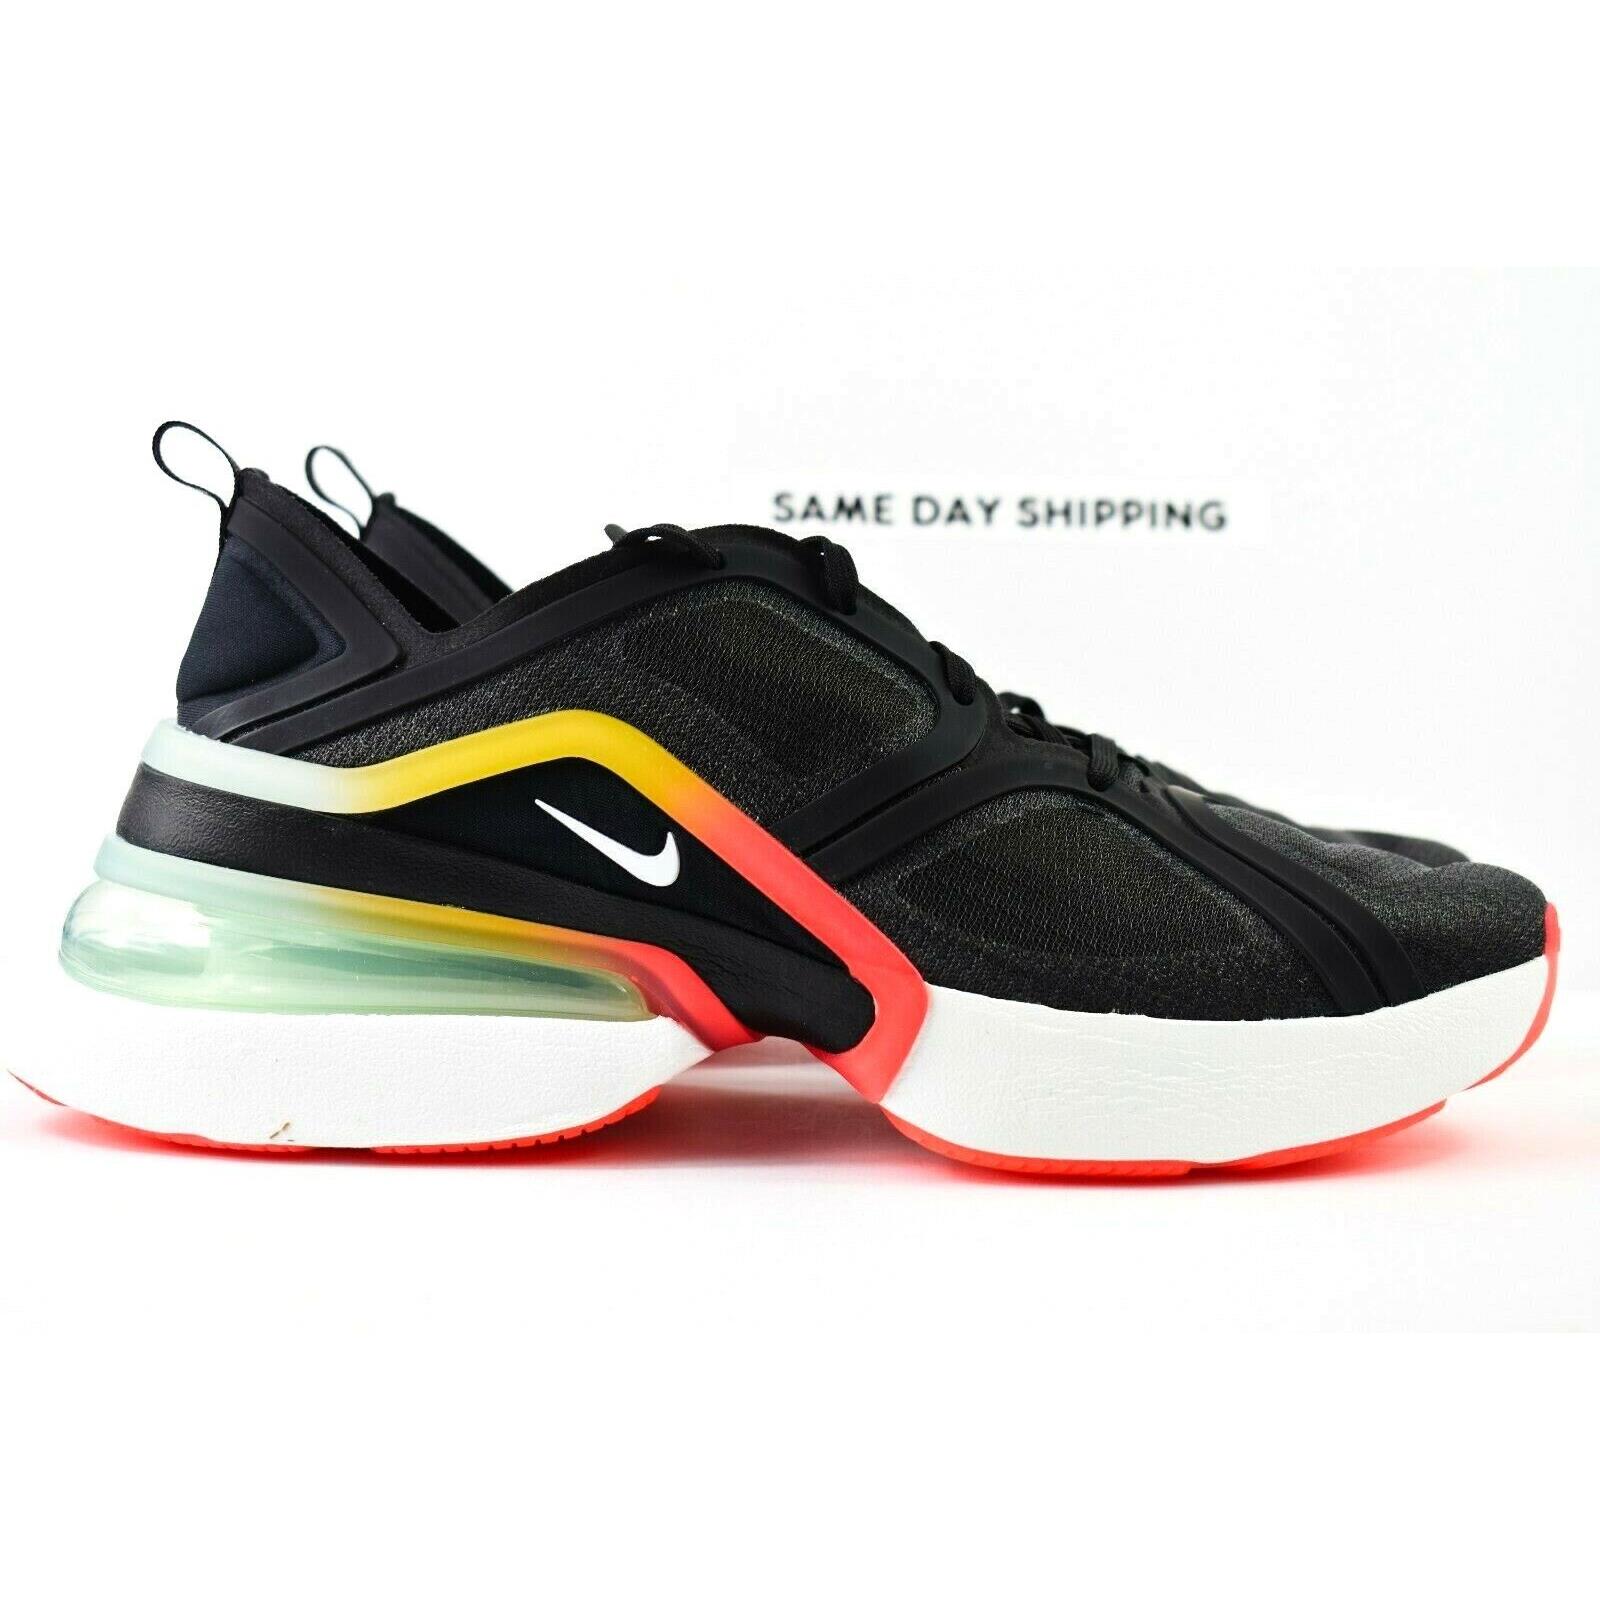 Nike Air Max 270 XX Mens Size 9.5 Shoes CU9430 001 Black Bright wm sz 11